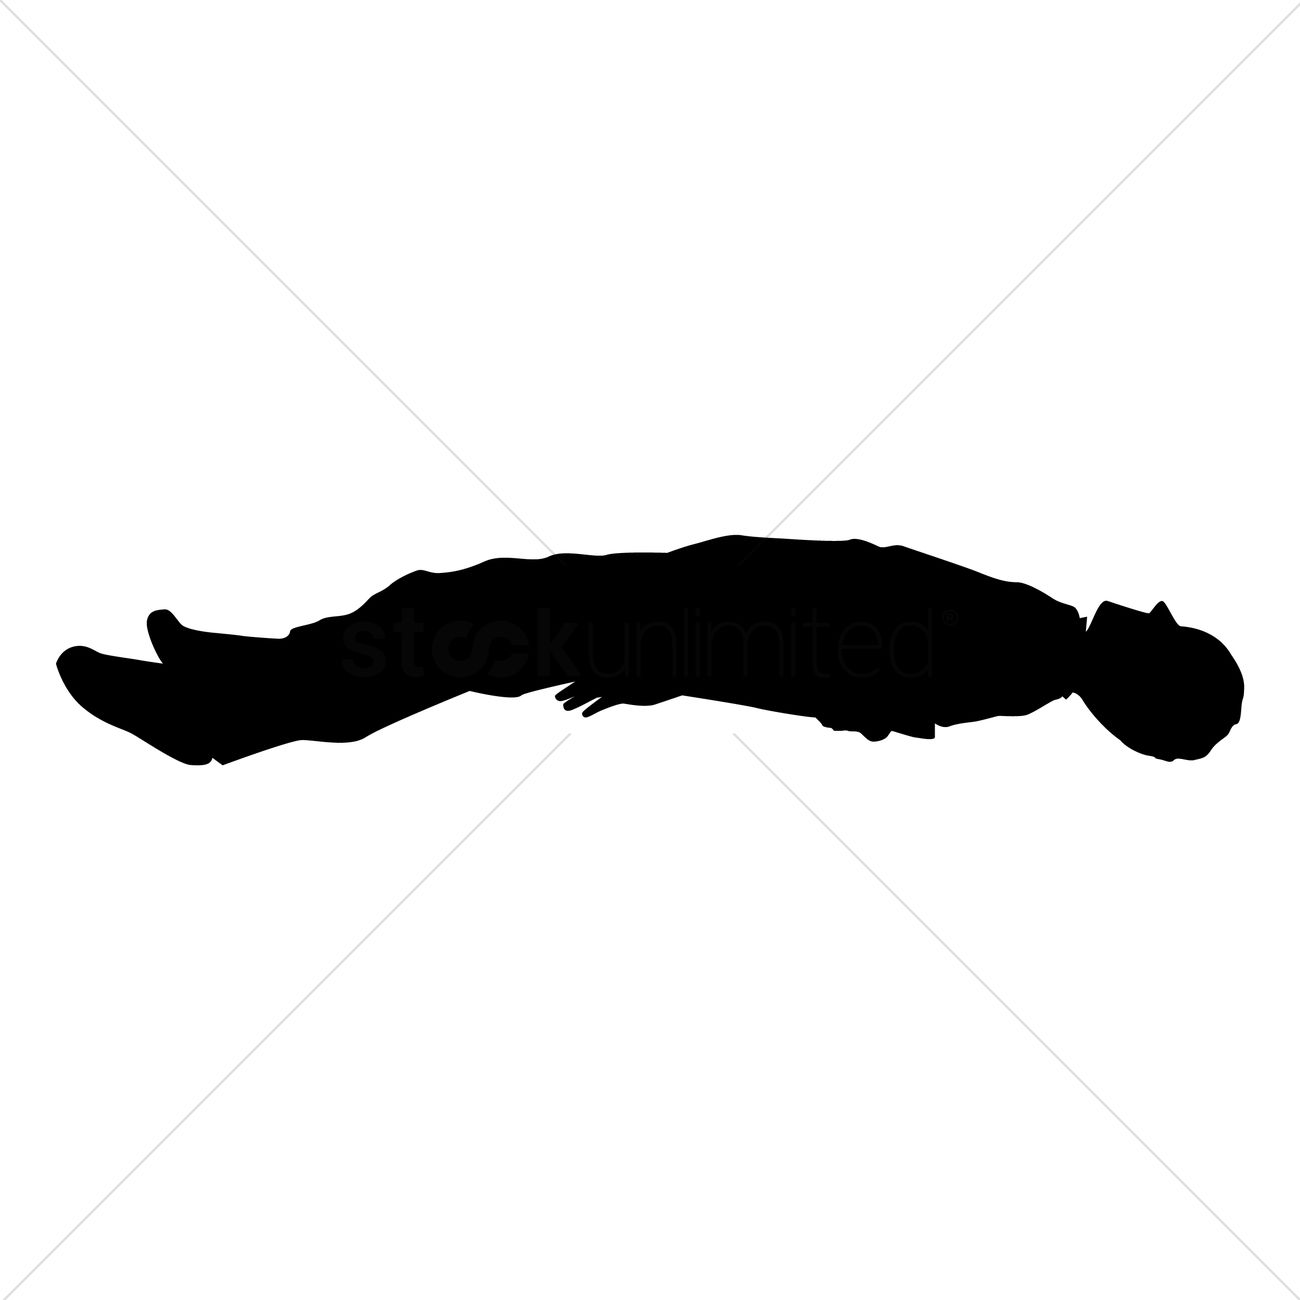 Lying man posture silhouette